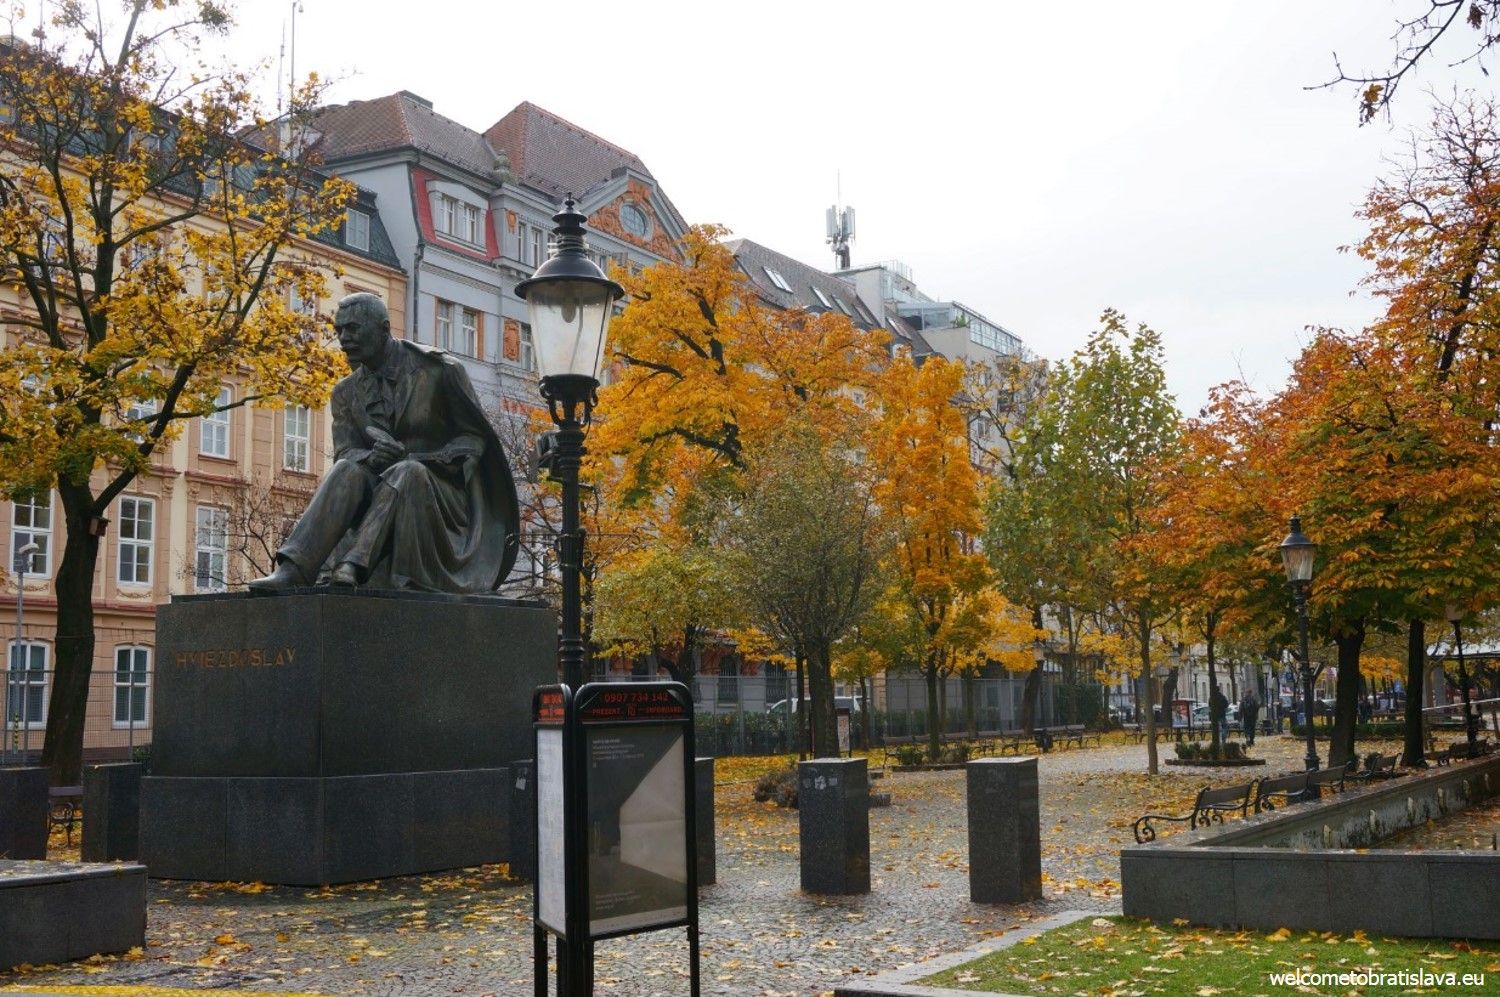 Hviezdoslav's square